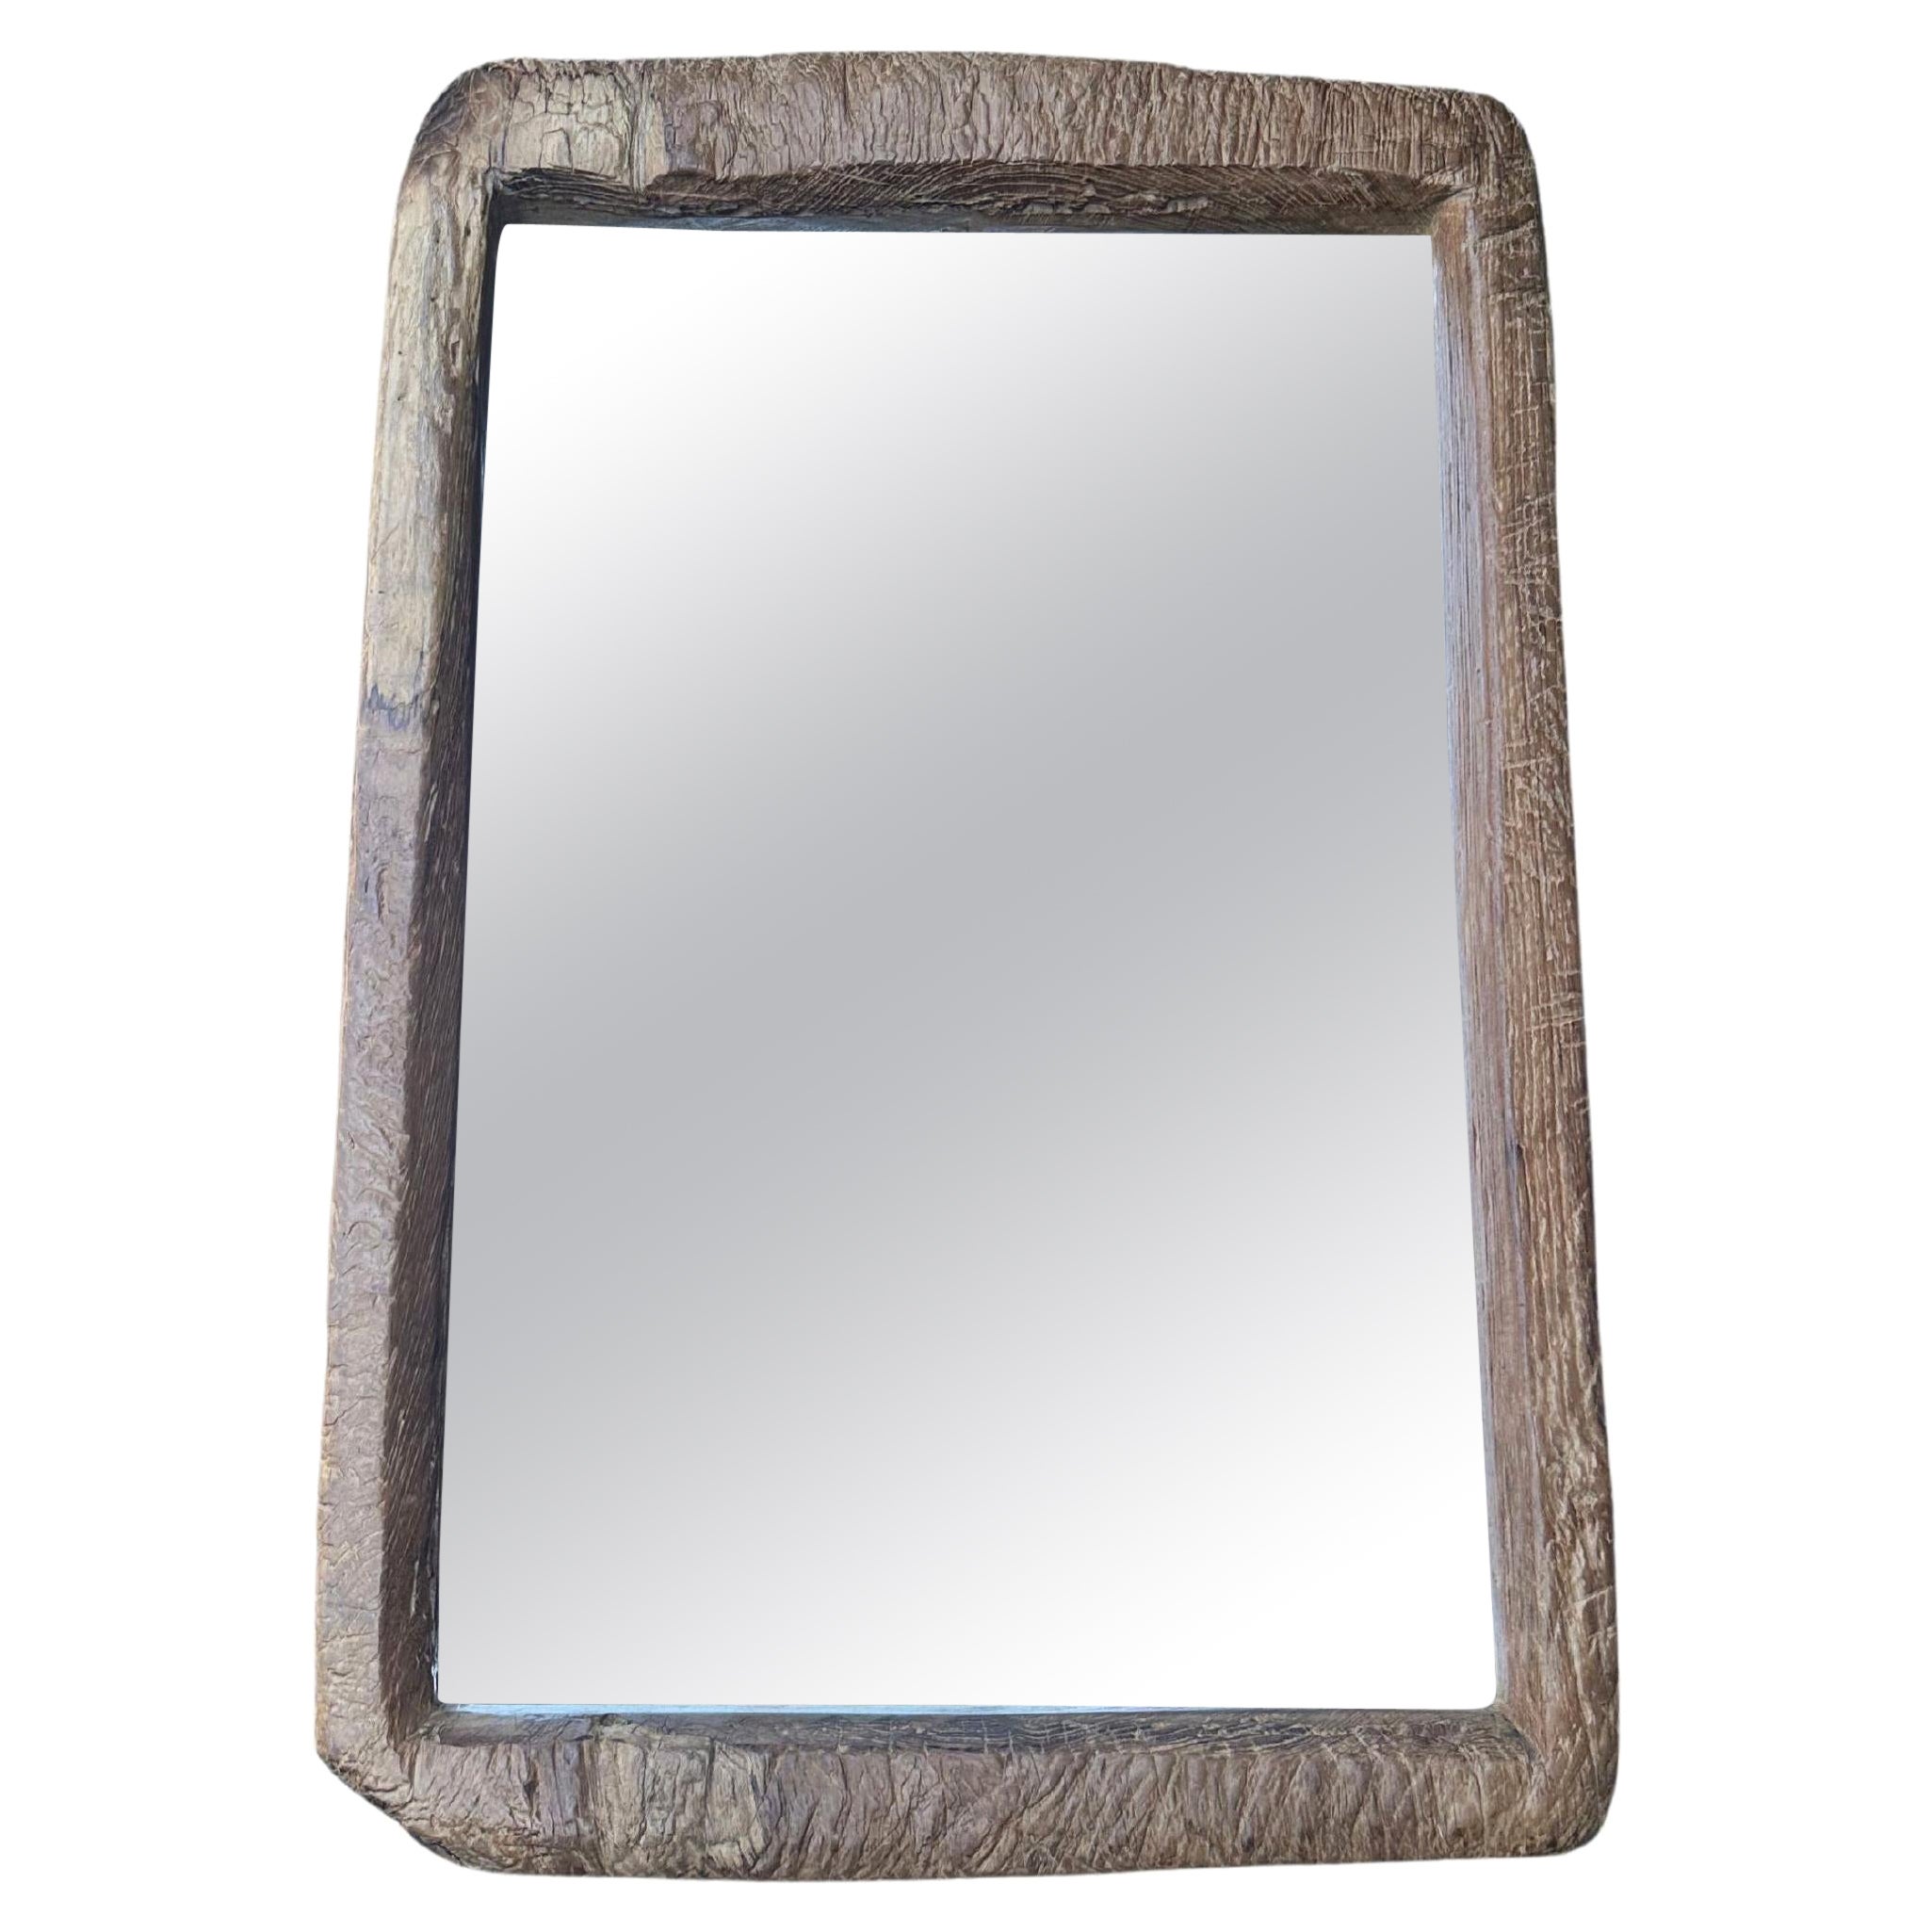 Rustic Teak Wood Mirror With Wonderful Age Related Patina & Markings